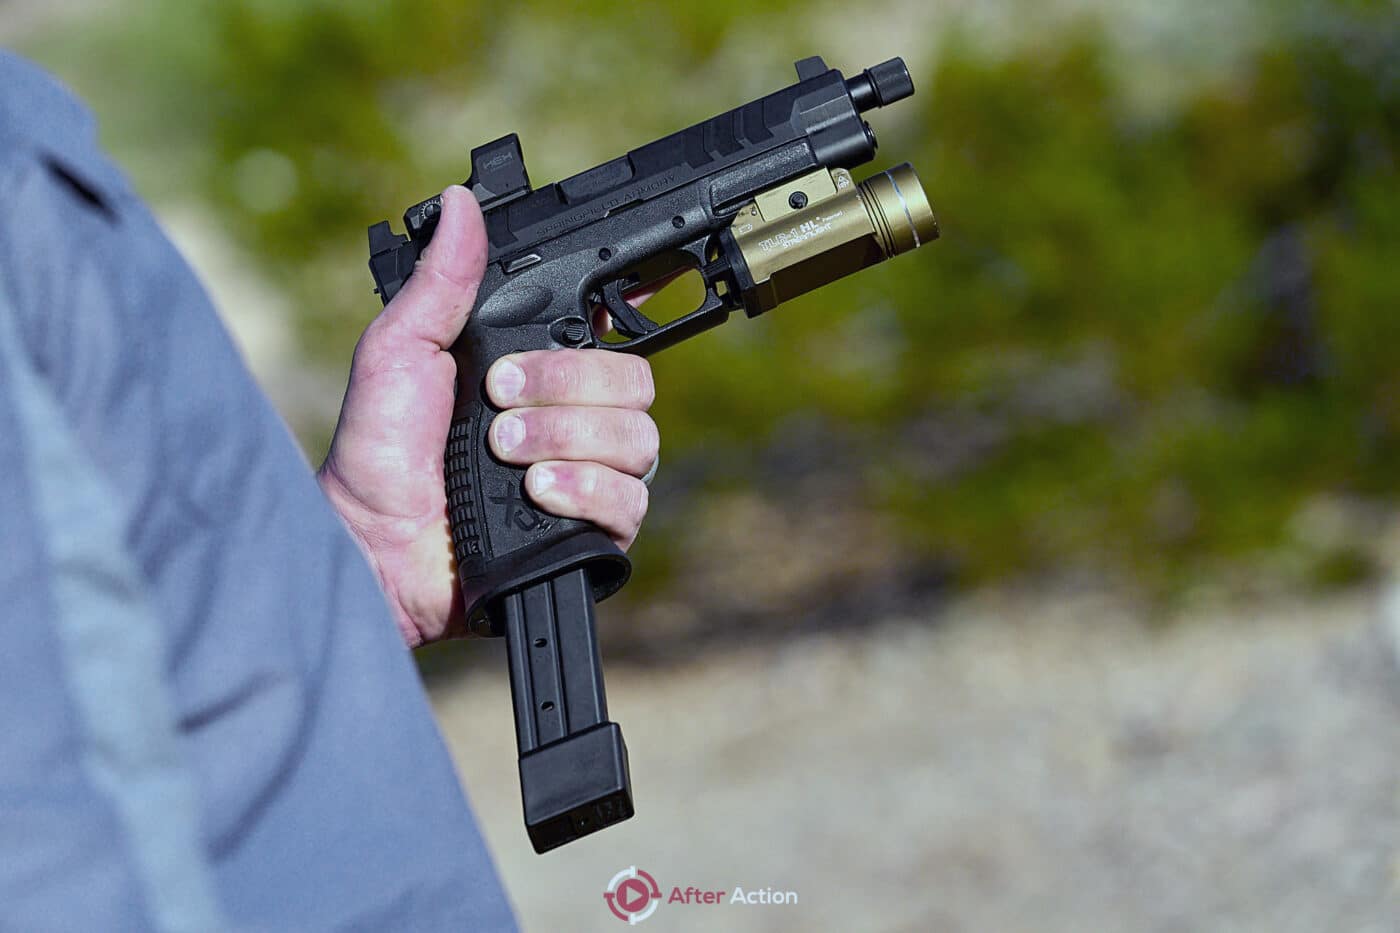 35 round magazine for the Springfield XD-M pistol